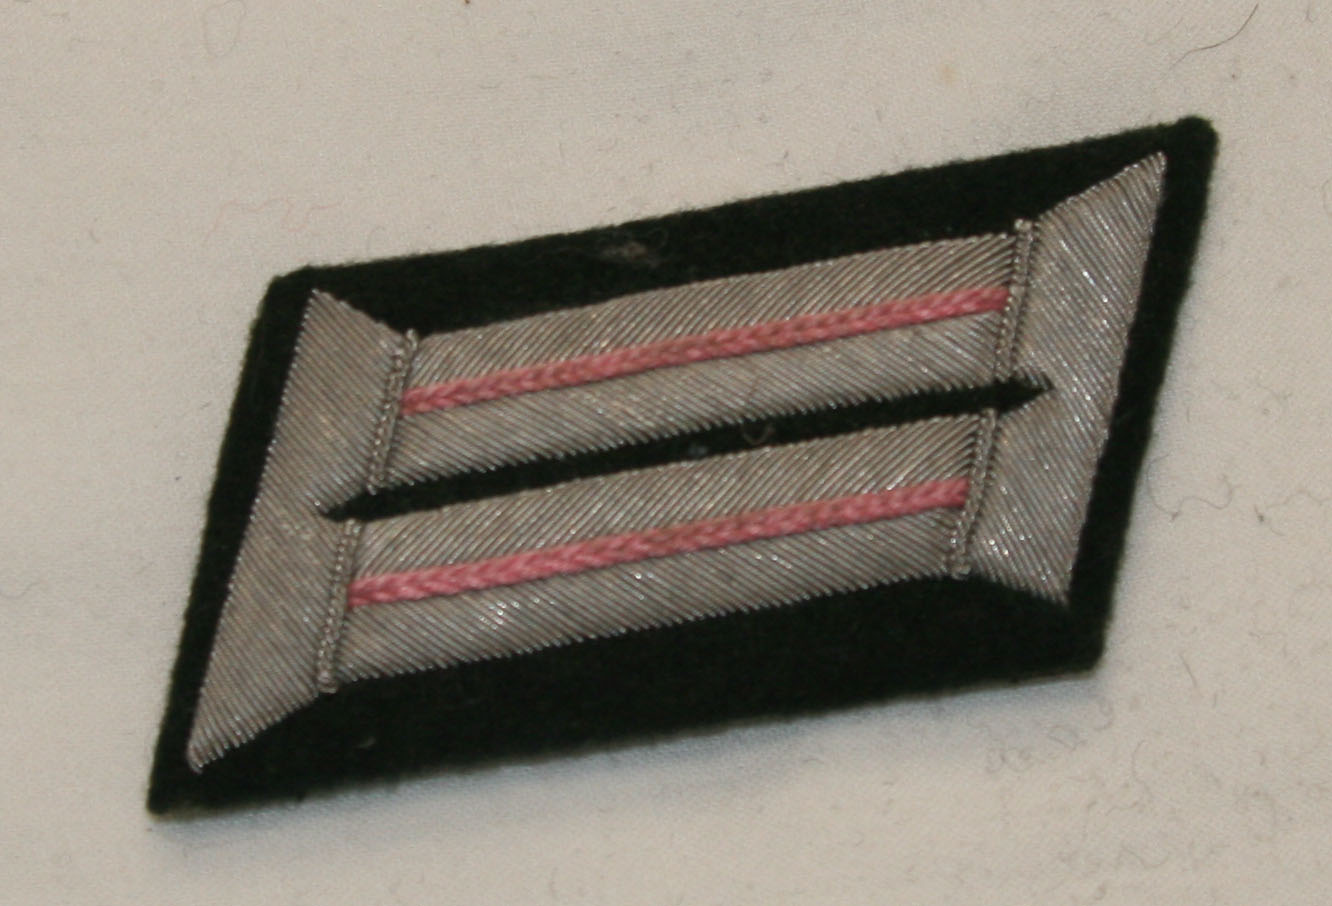 Heer Officer Collar tabs (Kragenspiegal), Pink/Panzer